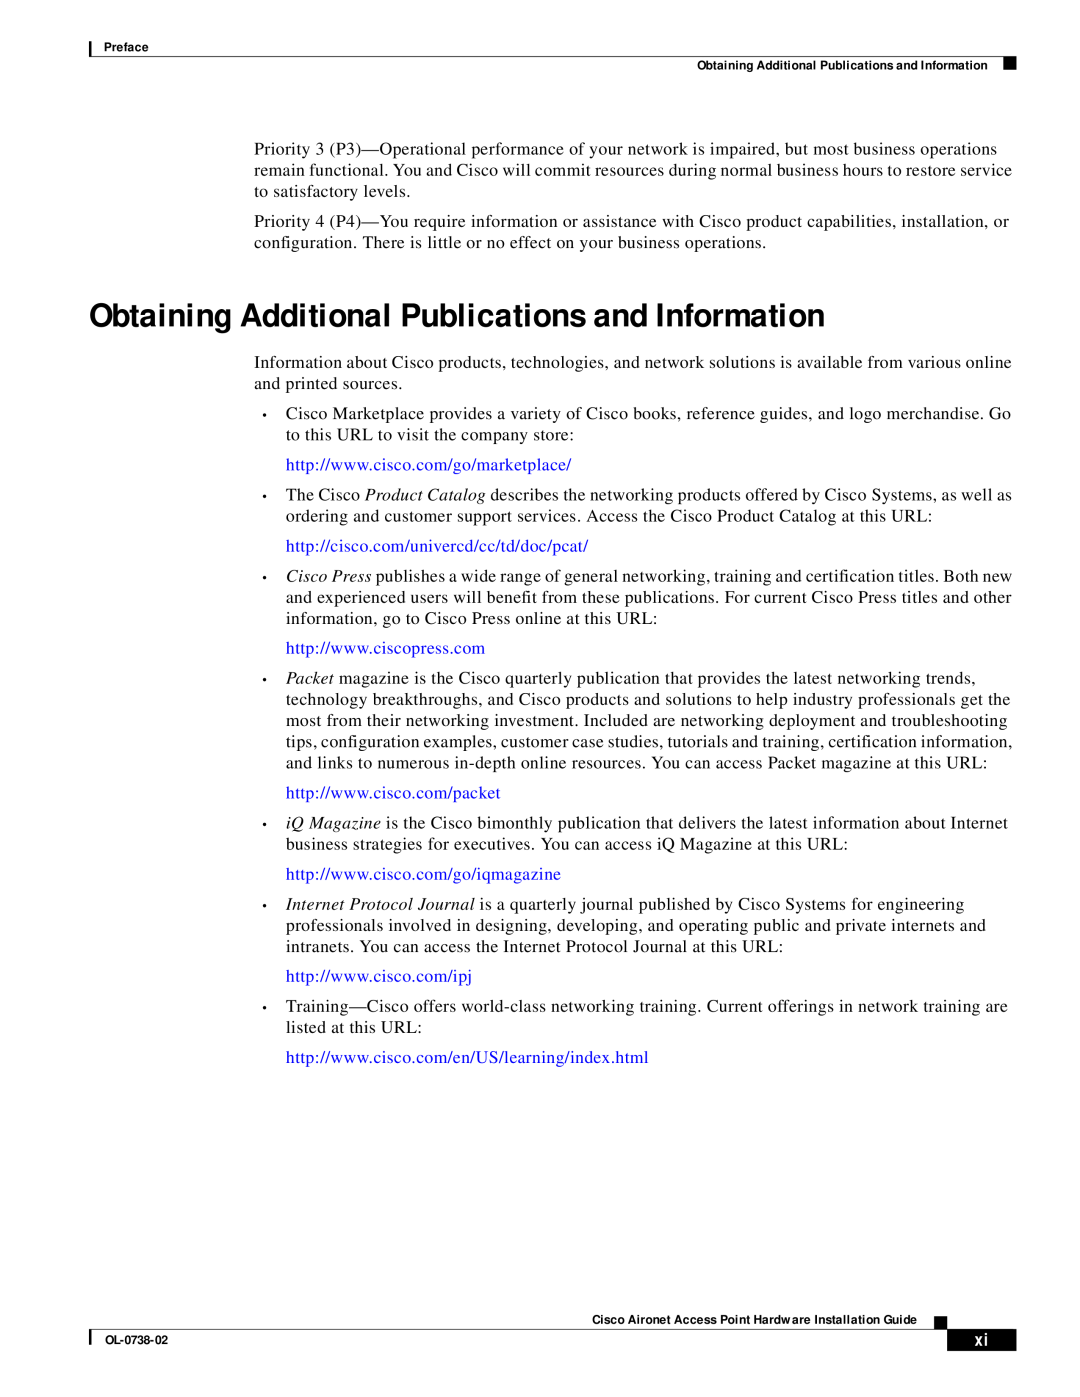 Cisco Systems OL-0738-02 Obtaining Additional Publications and Information, http//cisco.com/univercd/cc/td/doc/pcat 